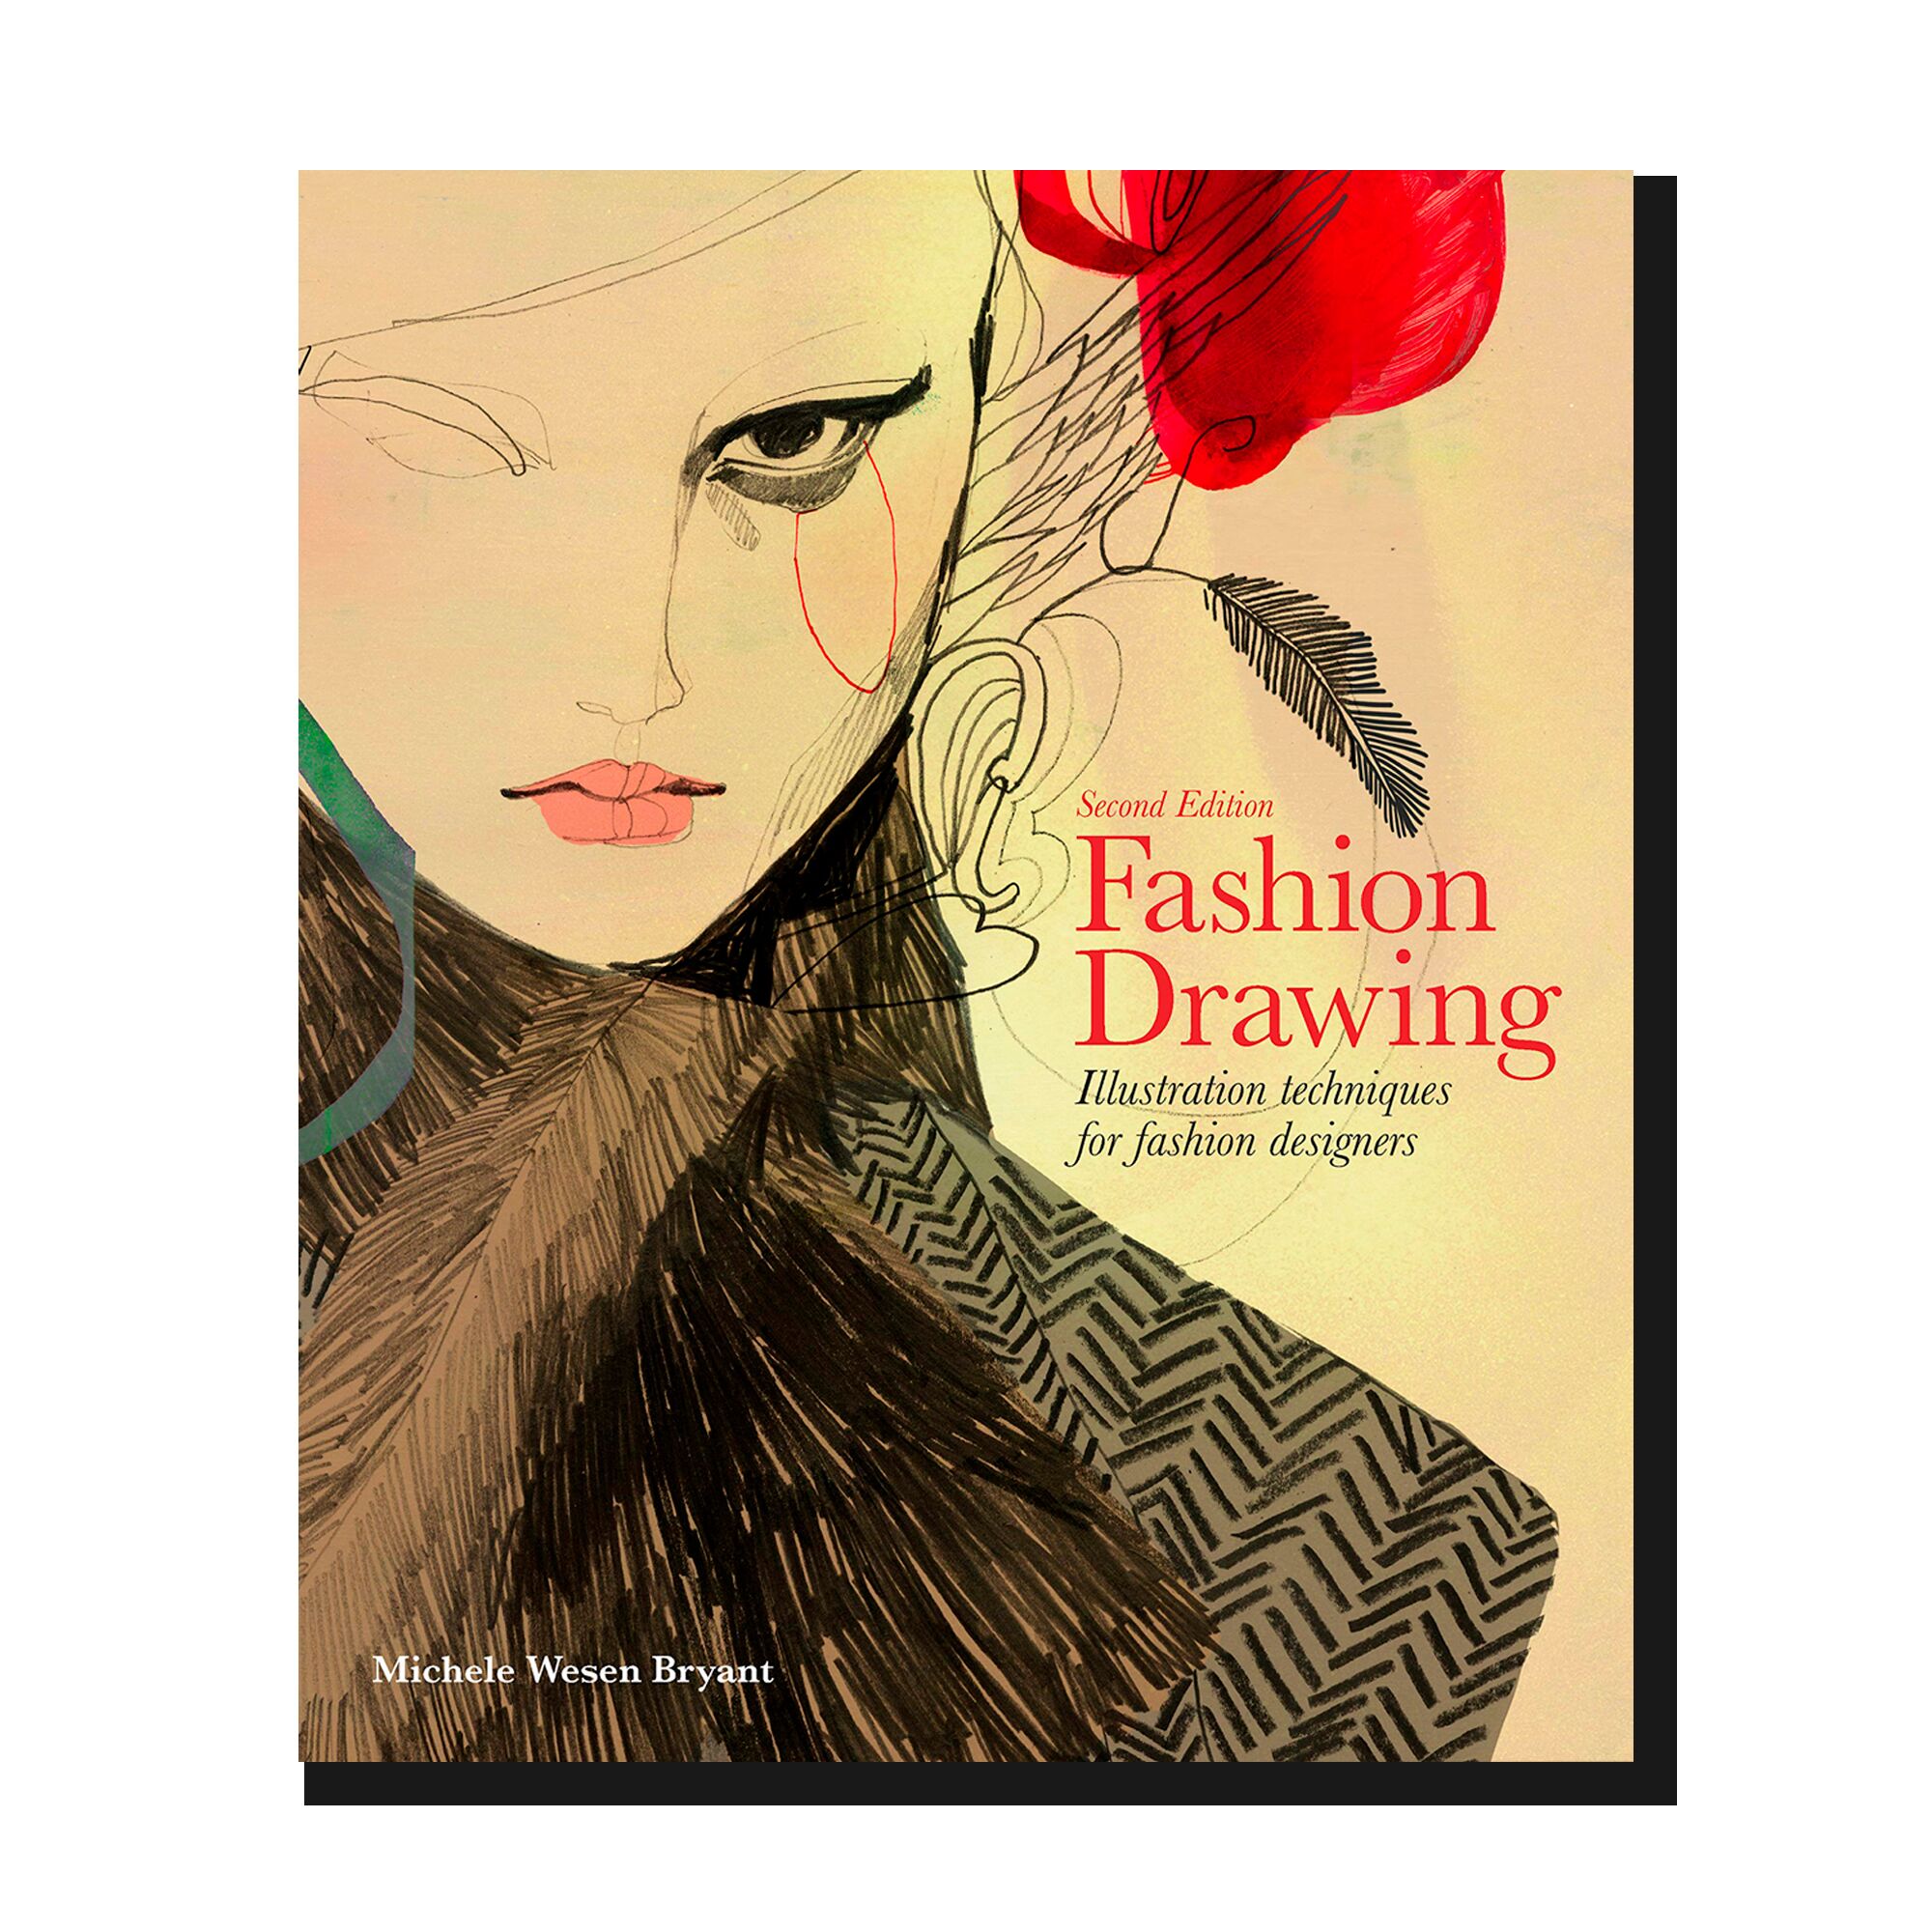 Fashion Drawing: Illustration Techniques for Fashion Designers